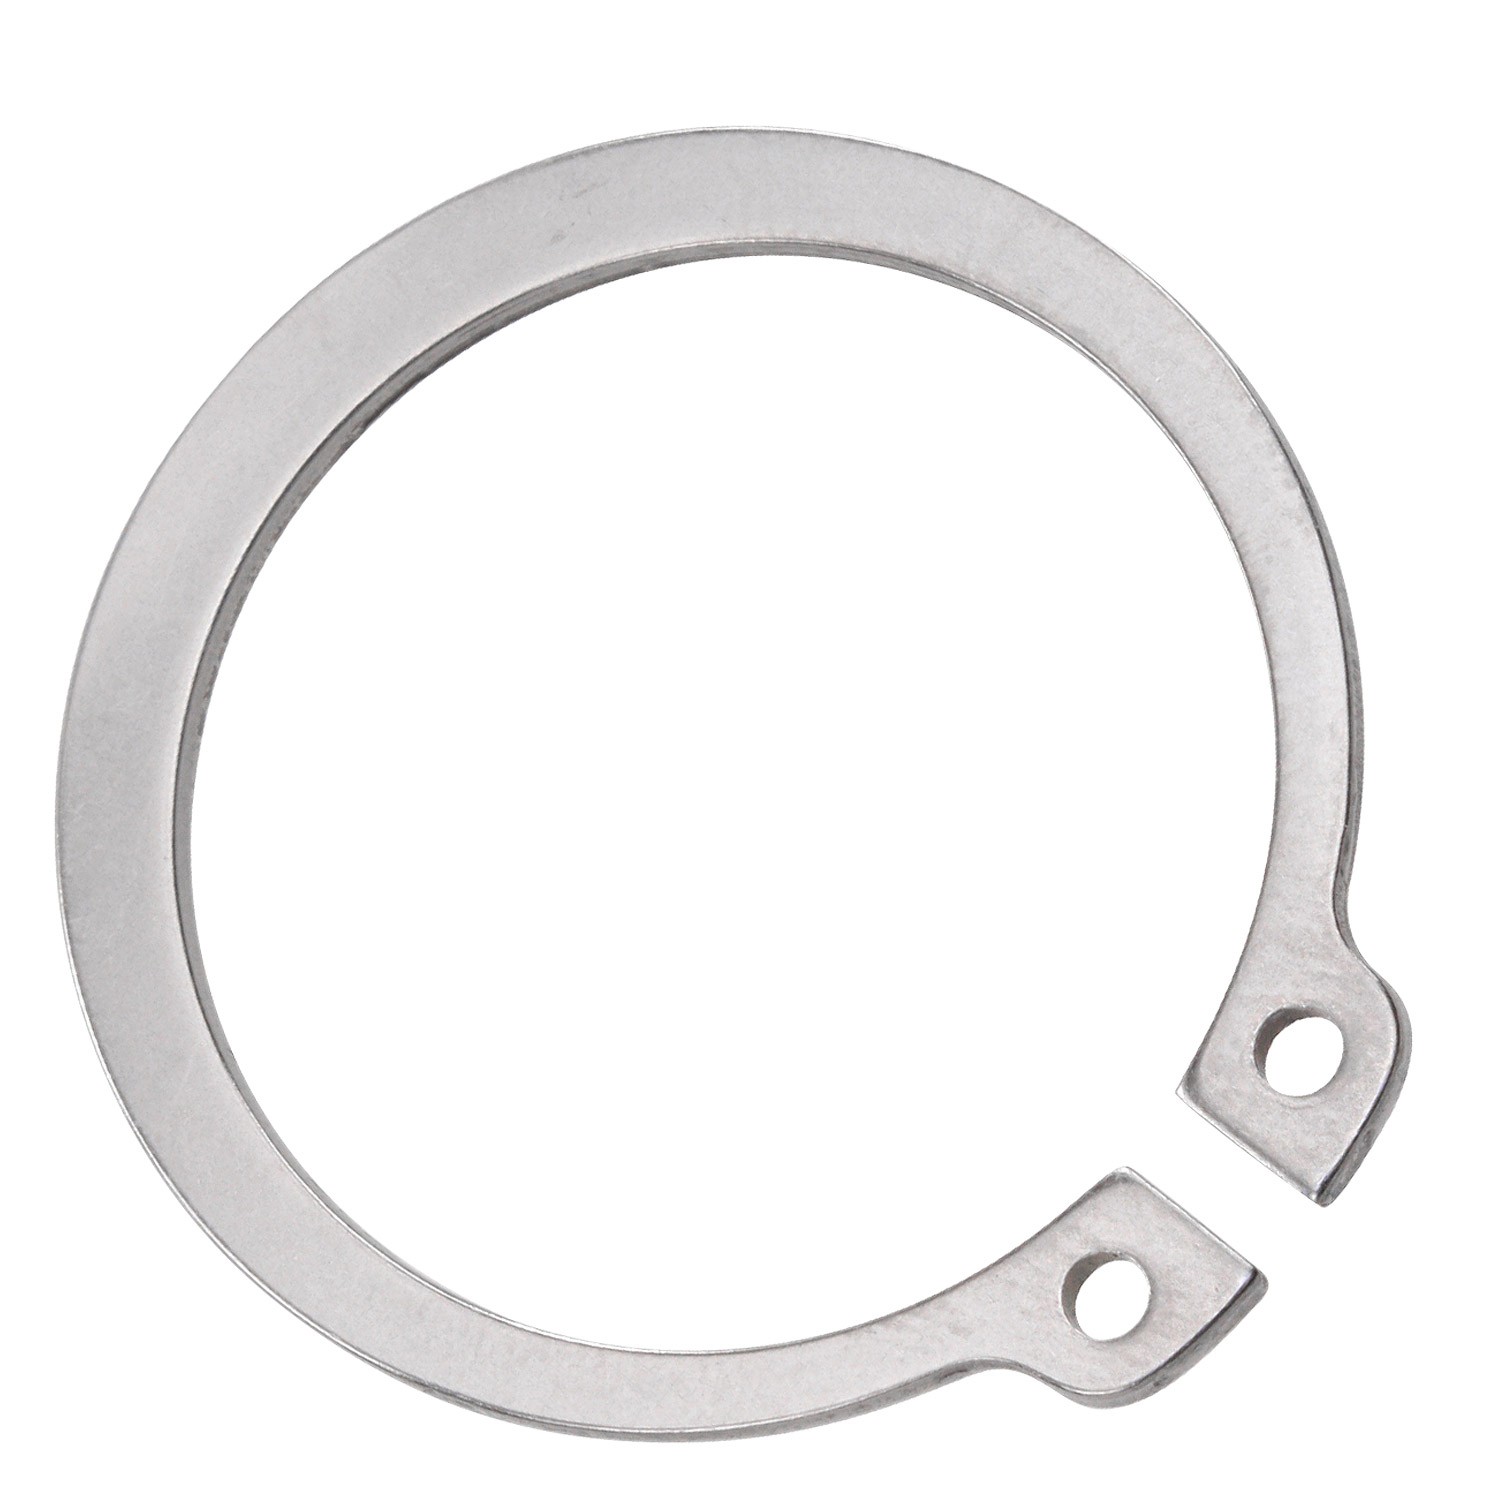 Кольцо стопорное наружное 17х1 DIN 471, нержавеющая сталь A4 - фото